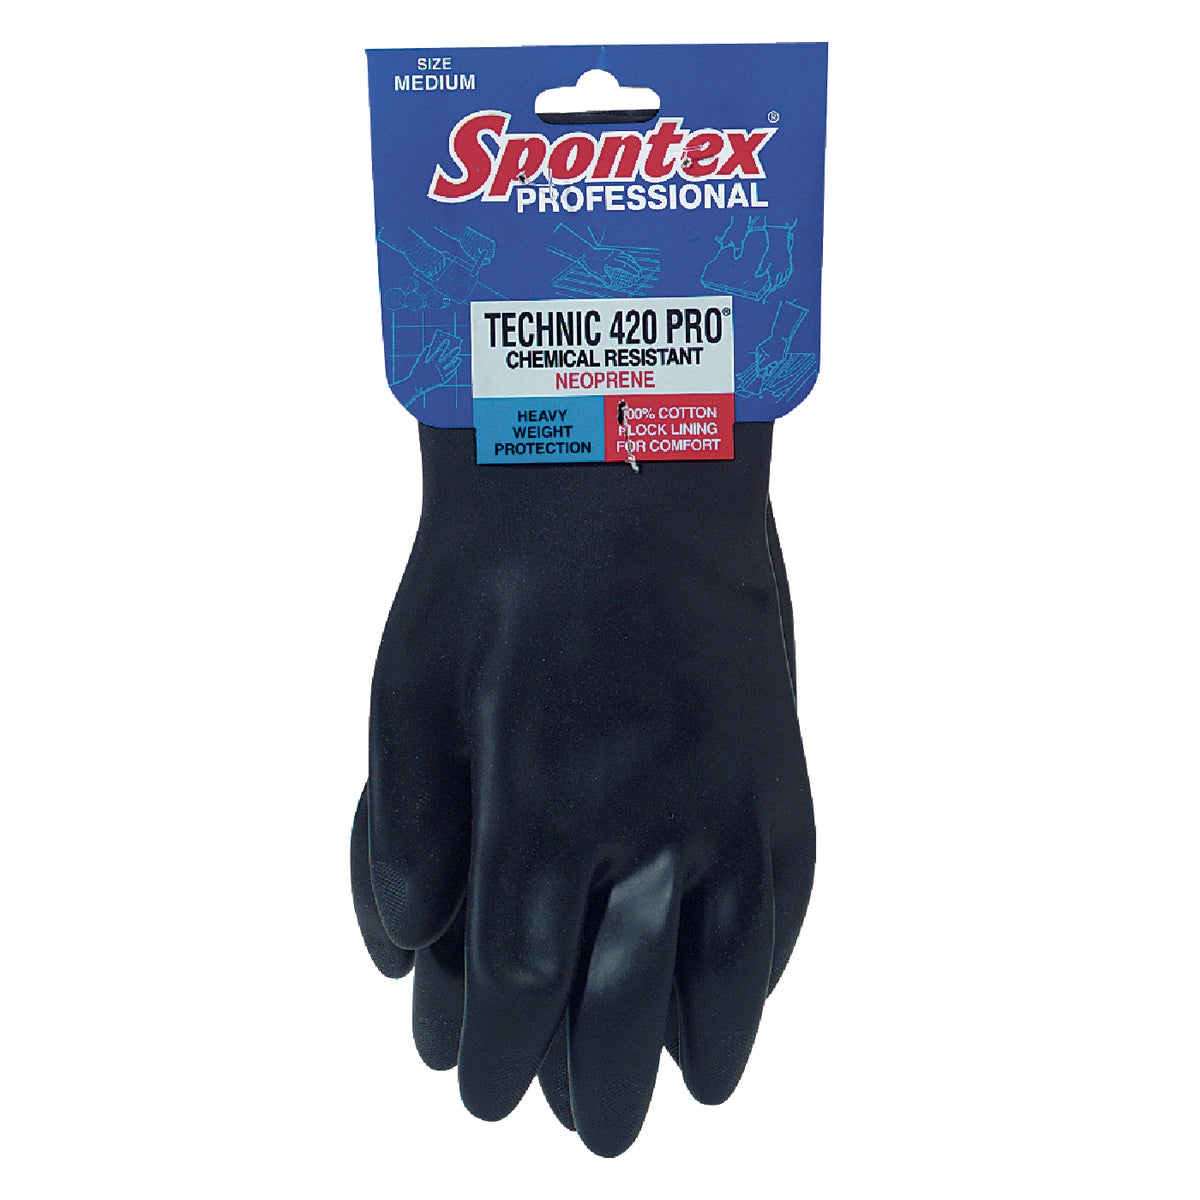 Item 644803, Professional grade neoprene rubber glove.